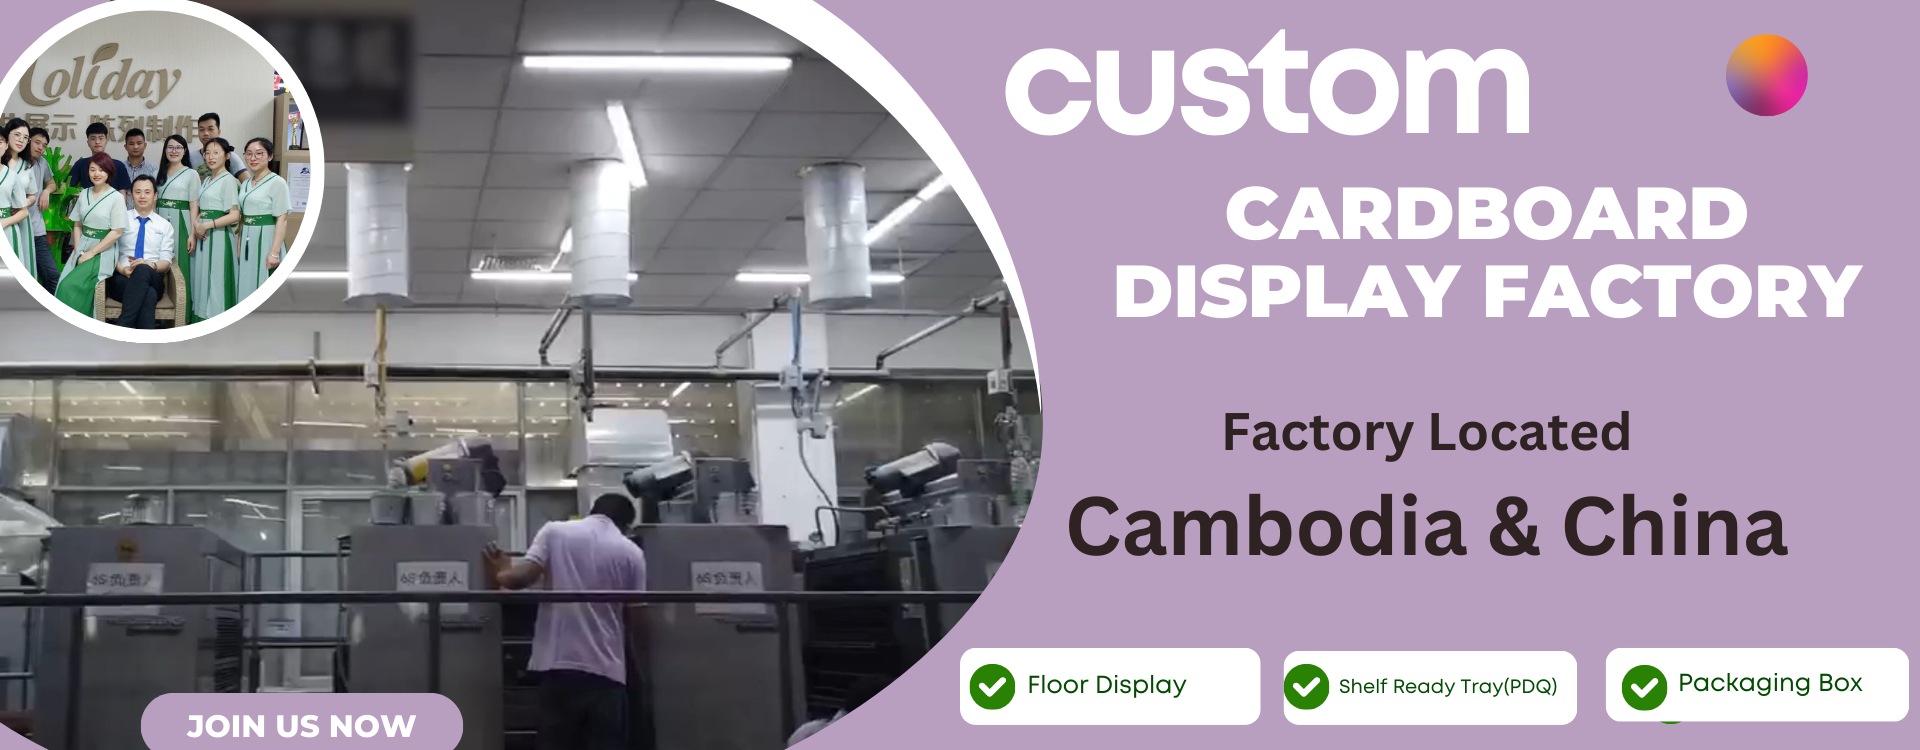 Custom Cardboard Displays Factory In Cambodia And China